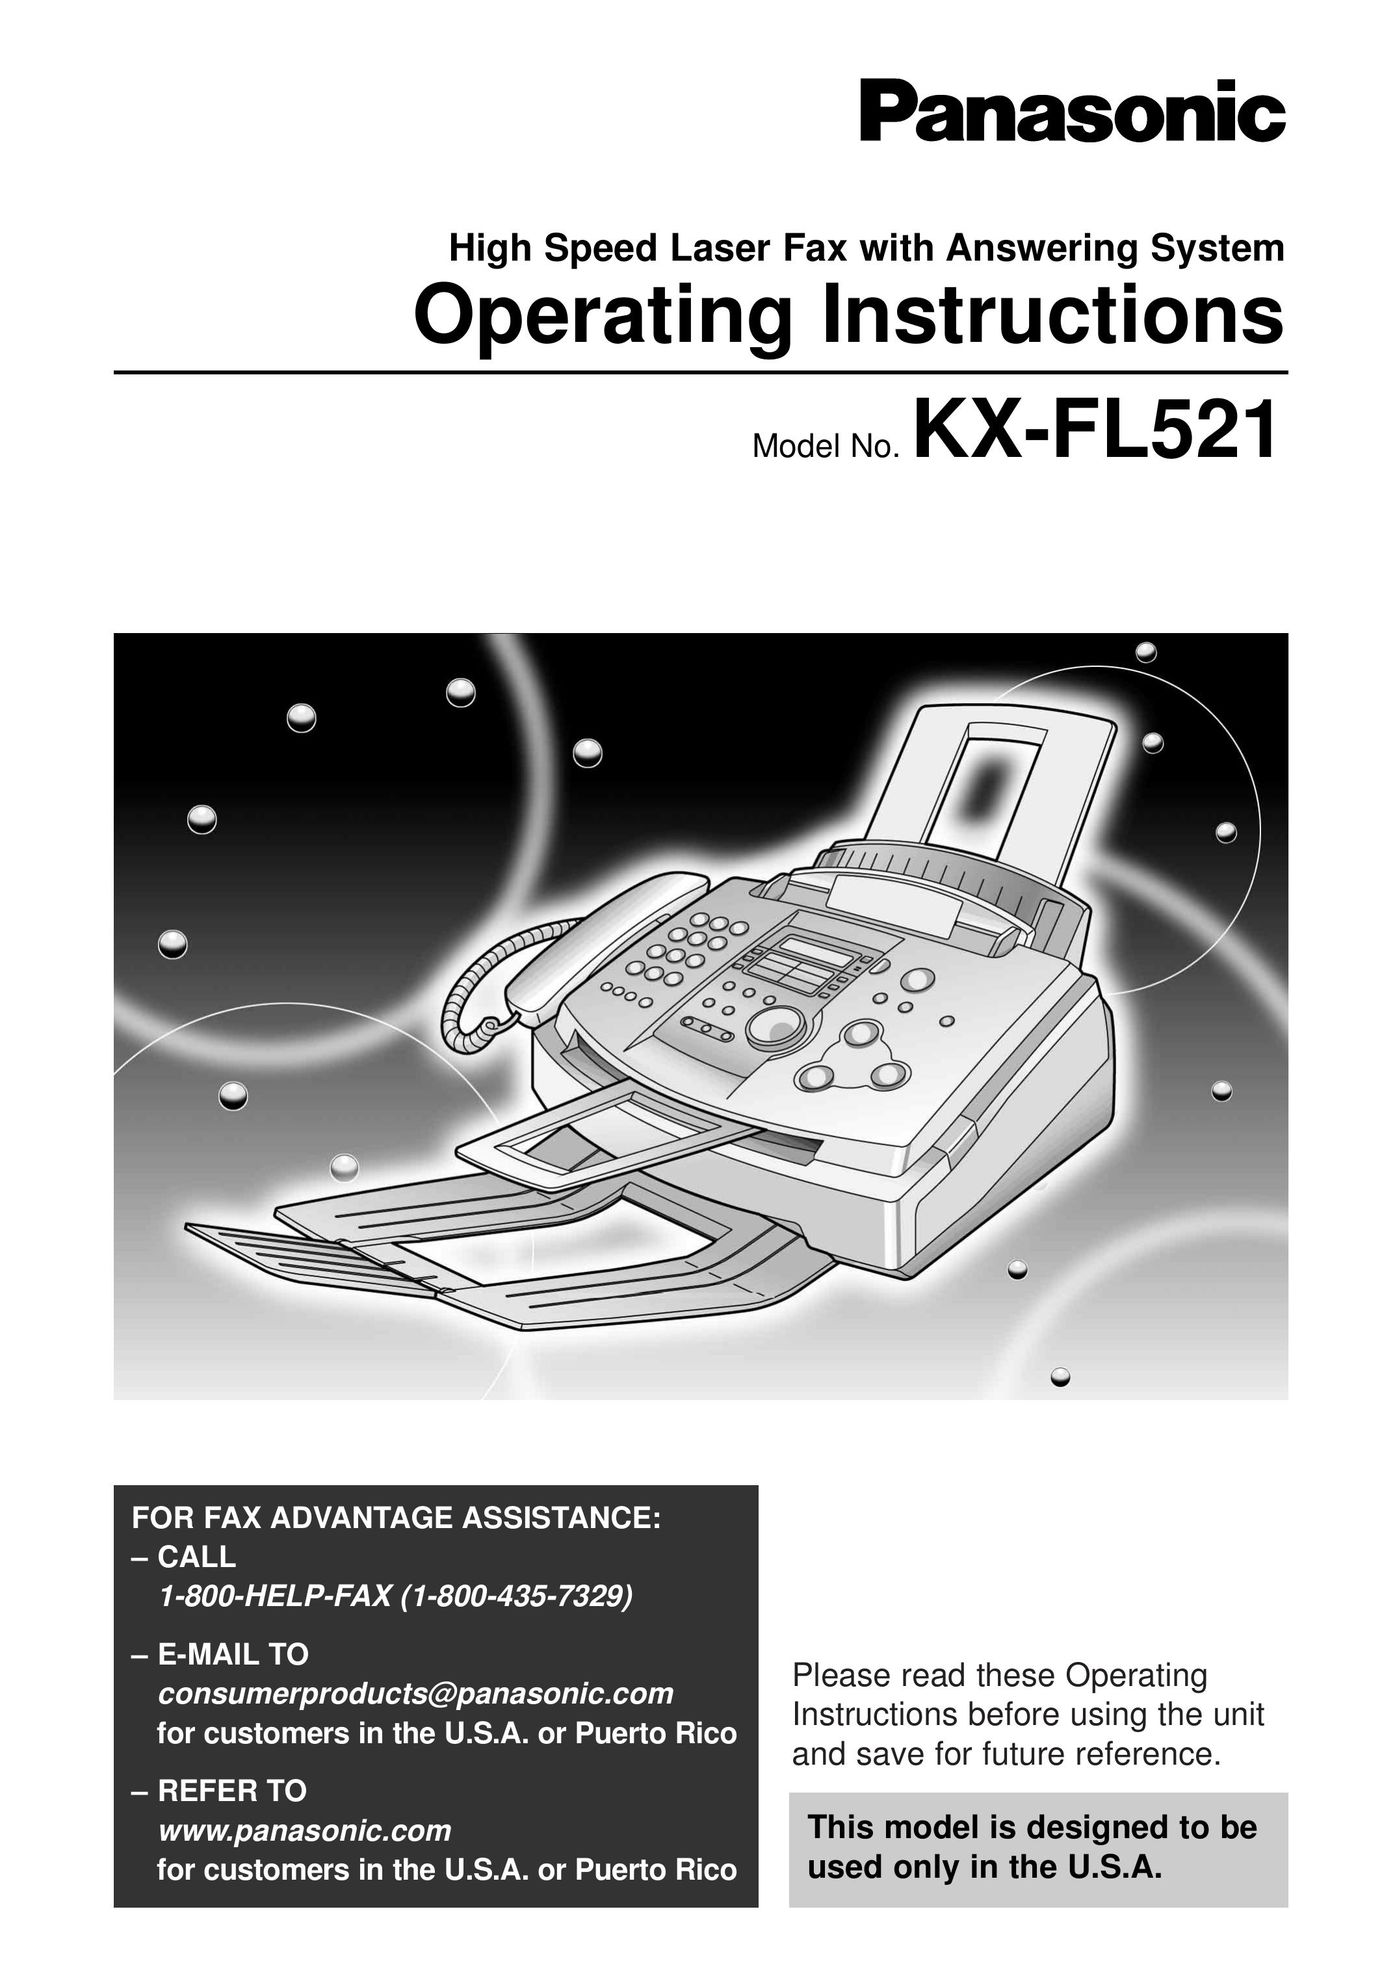 Panasonic KX-FL521 Answering Machine User Manual